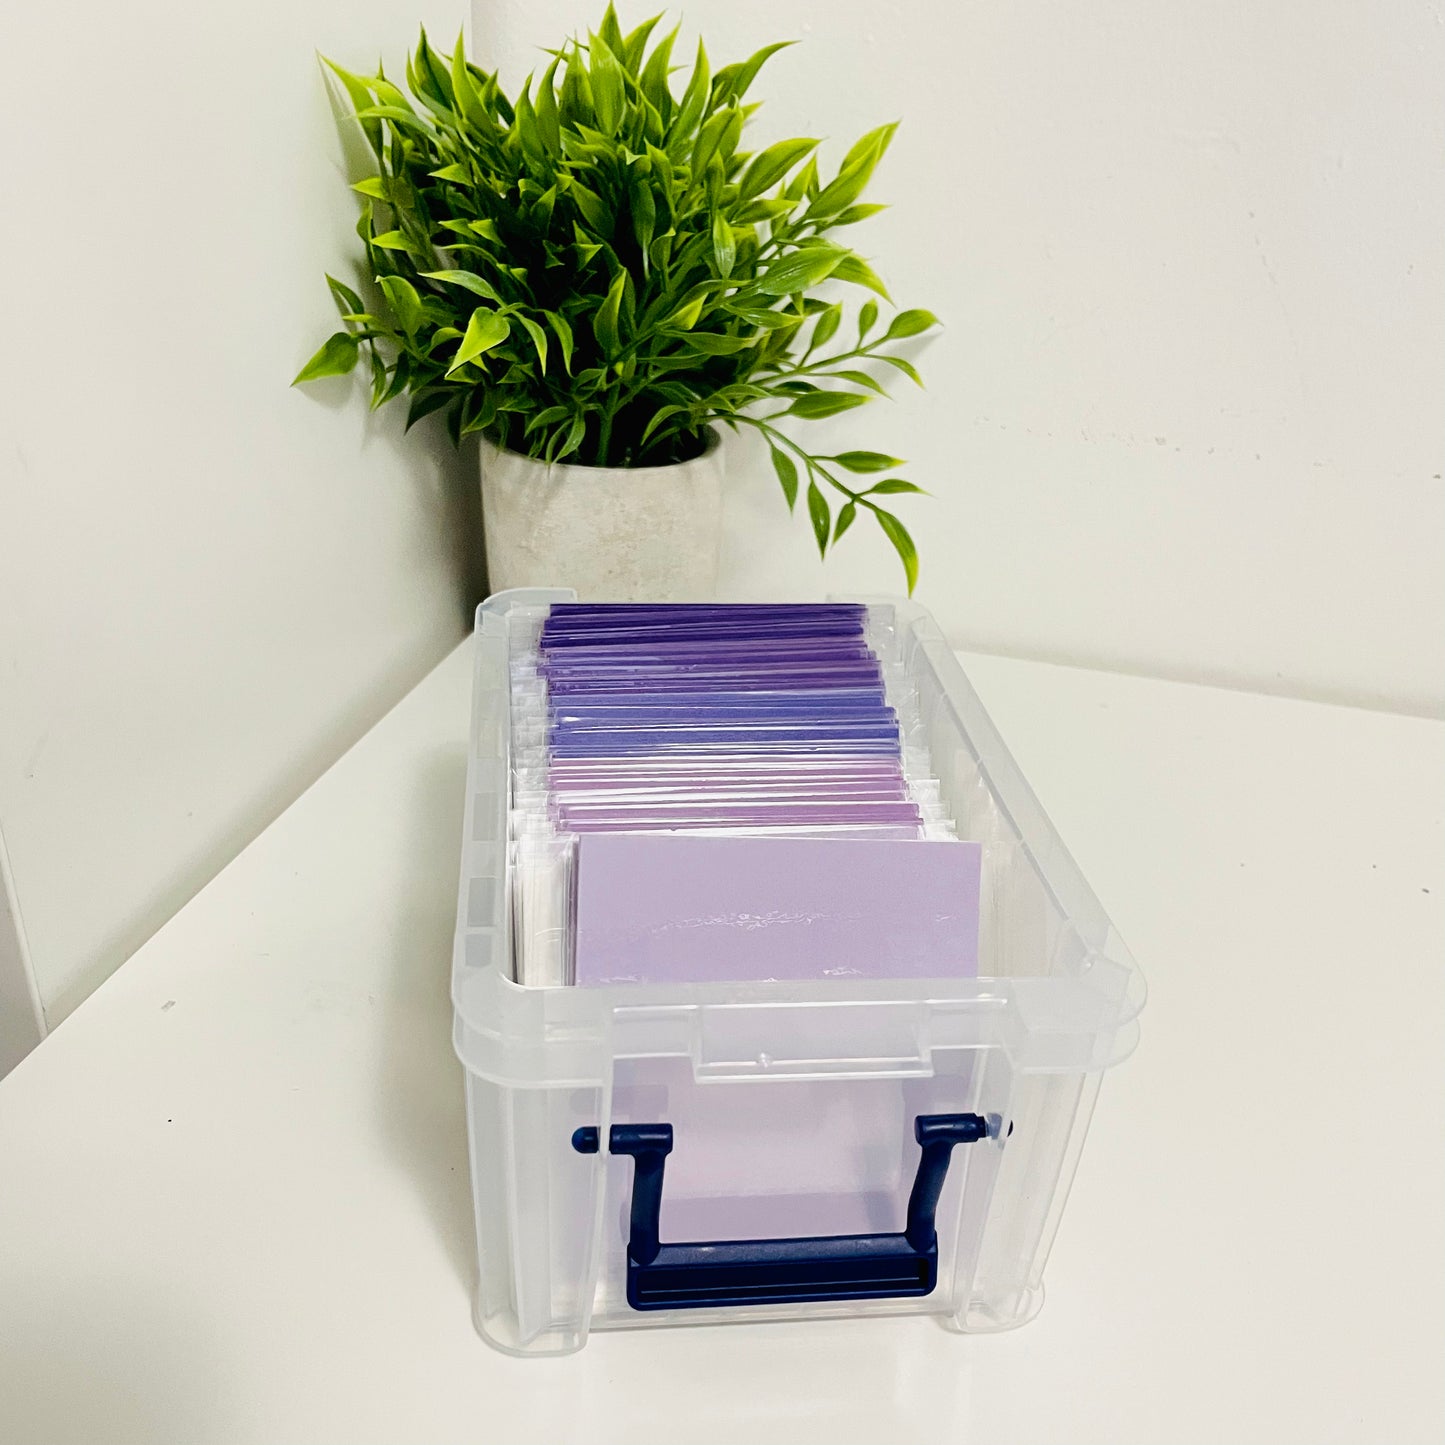 100 Envelopes Savings Challenge Box